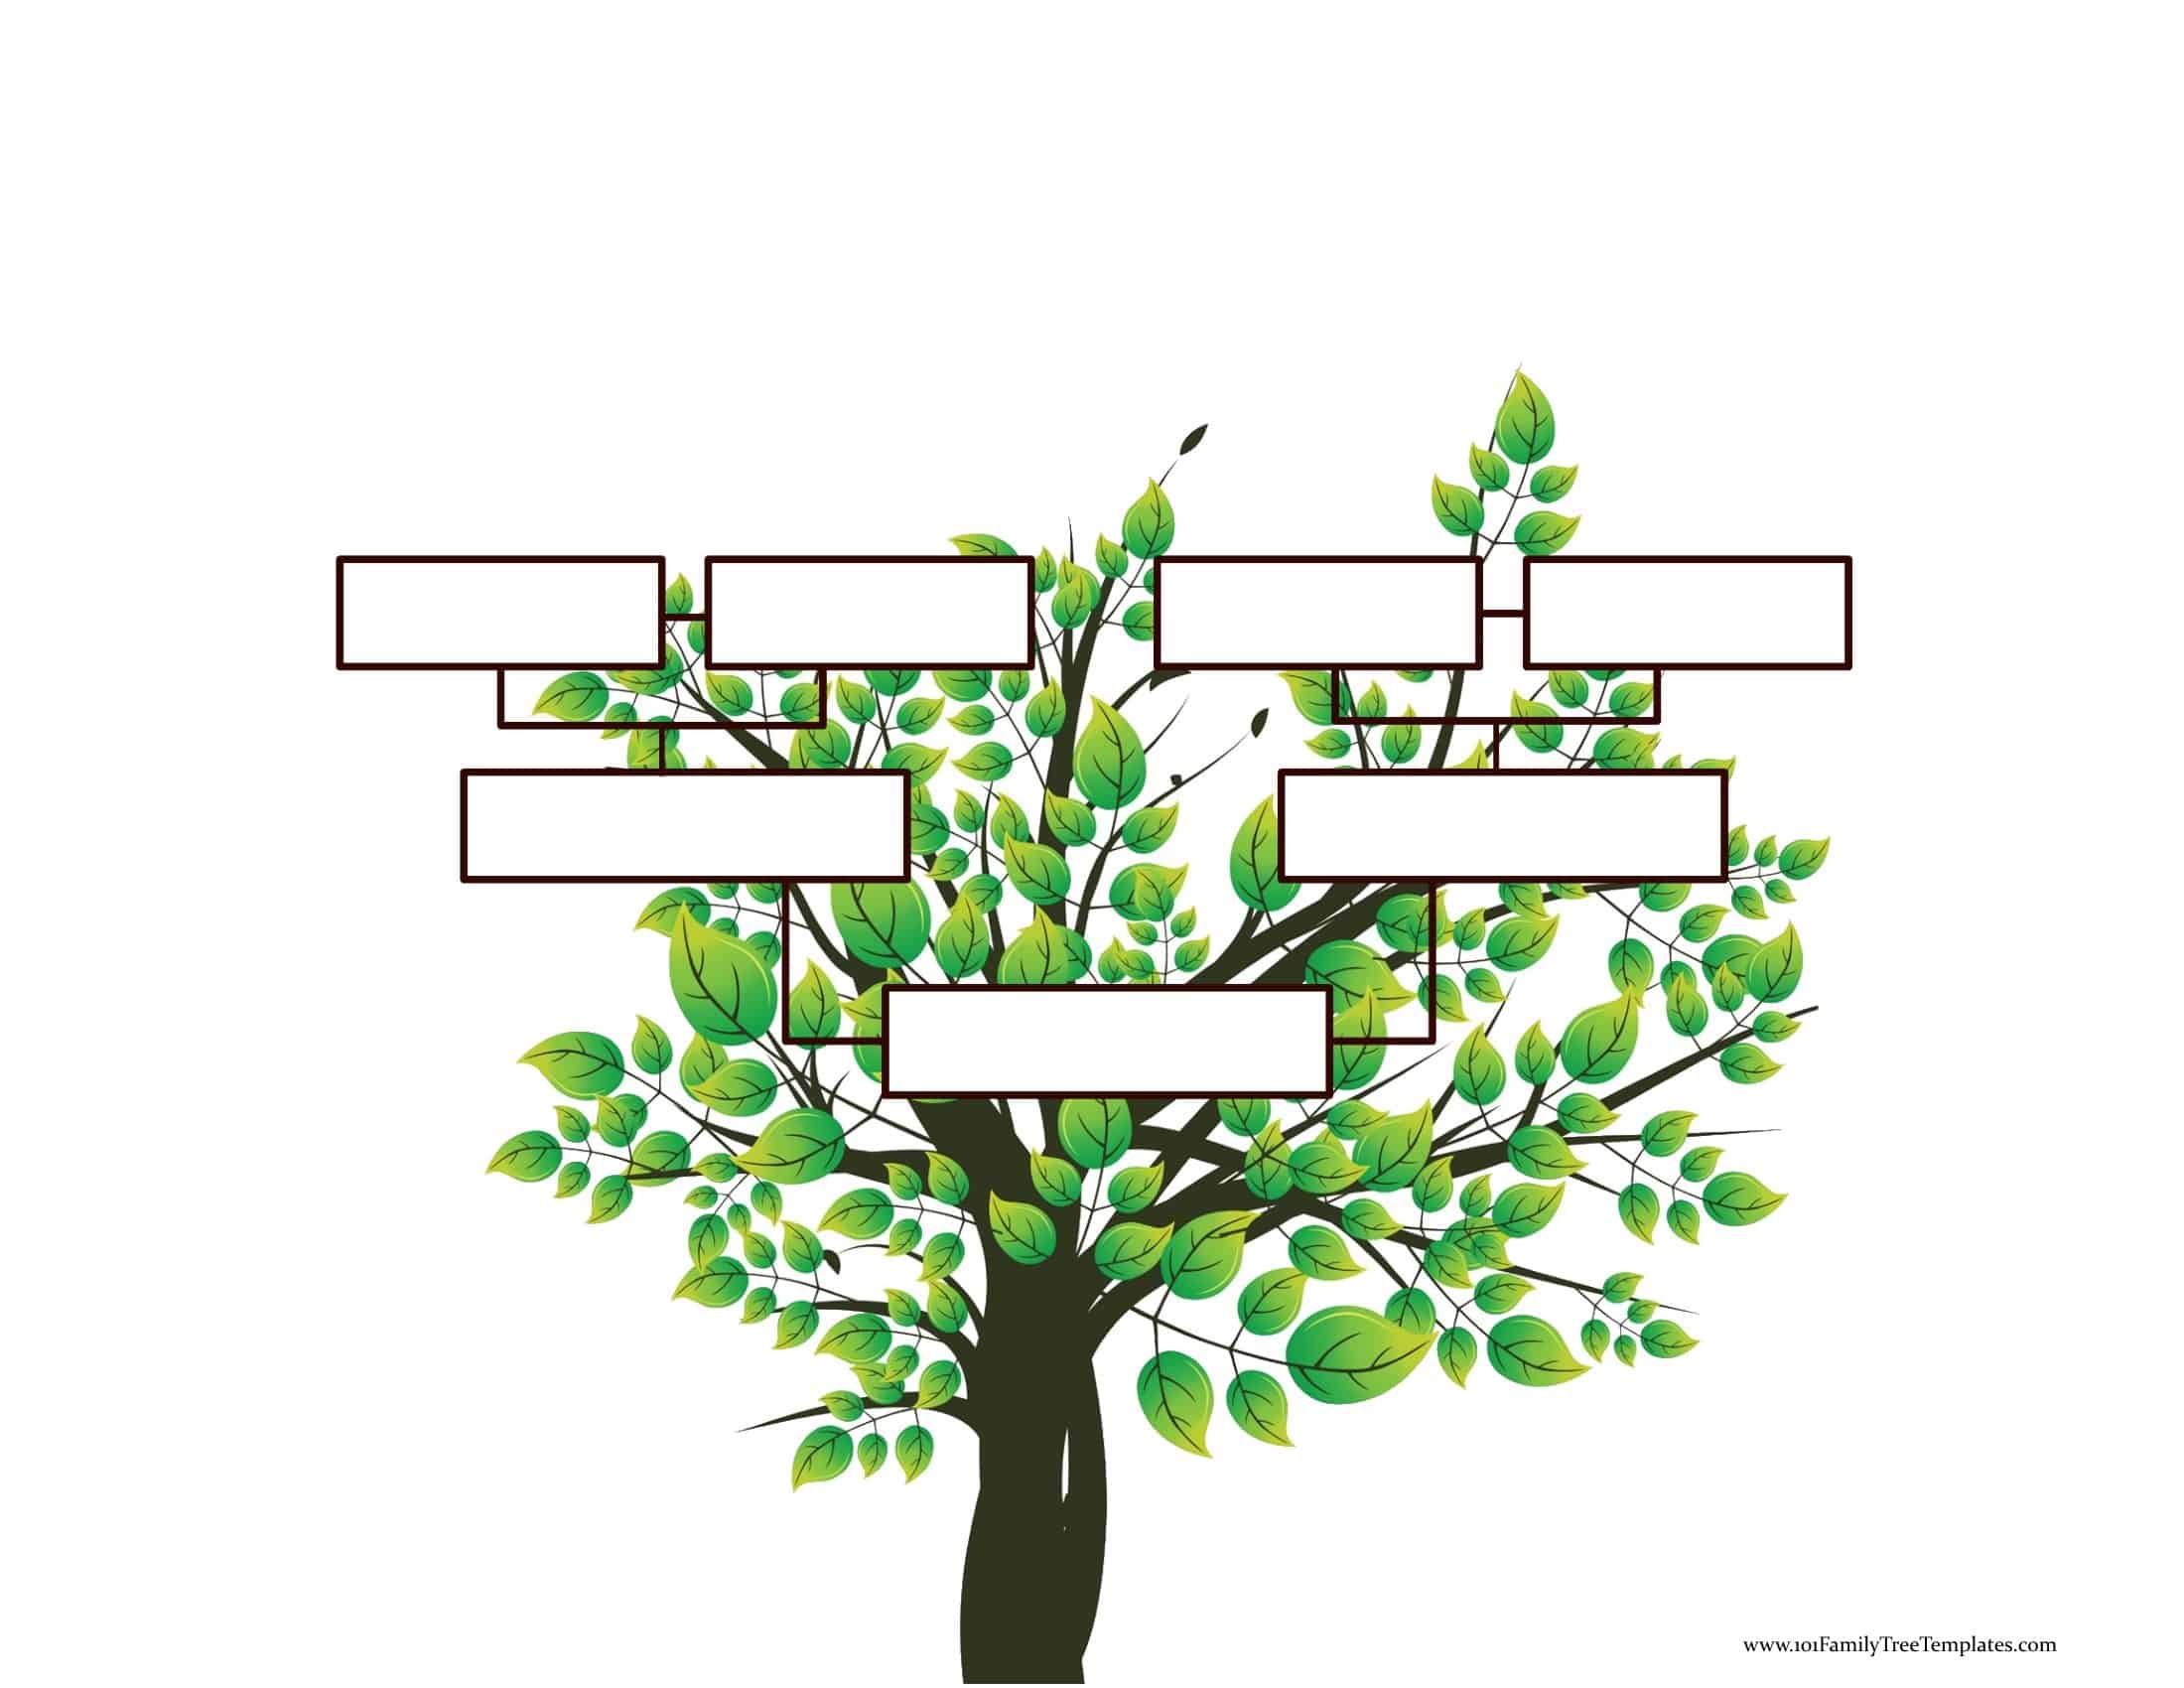 Editable Family Tree Designs Templates